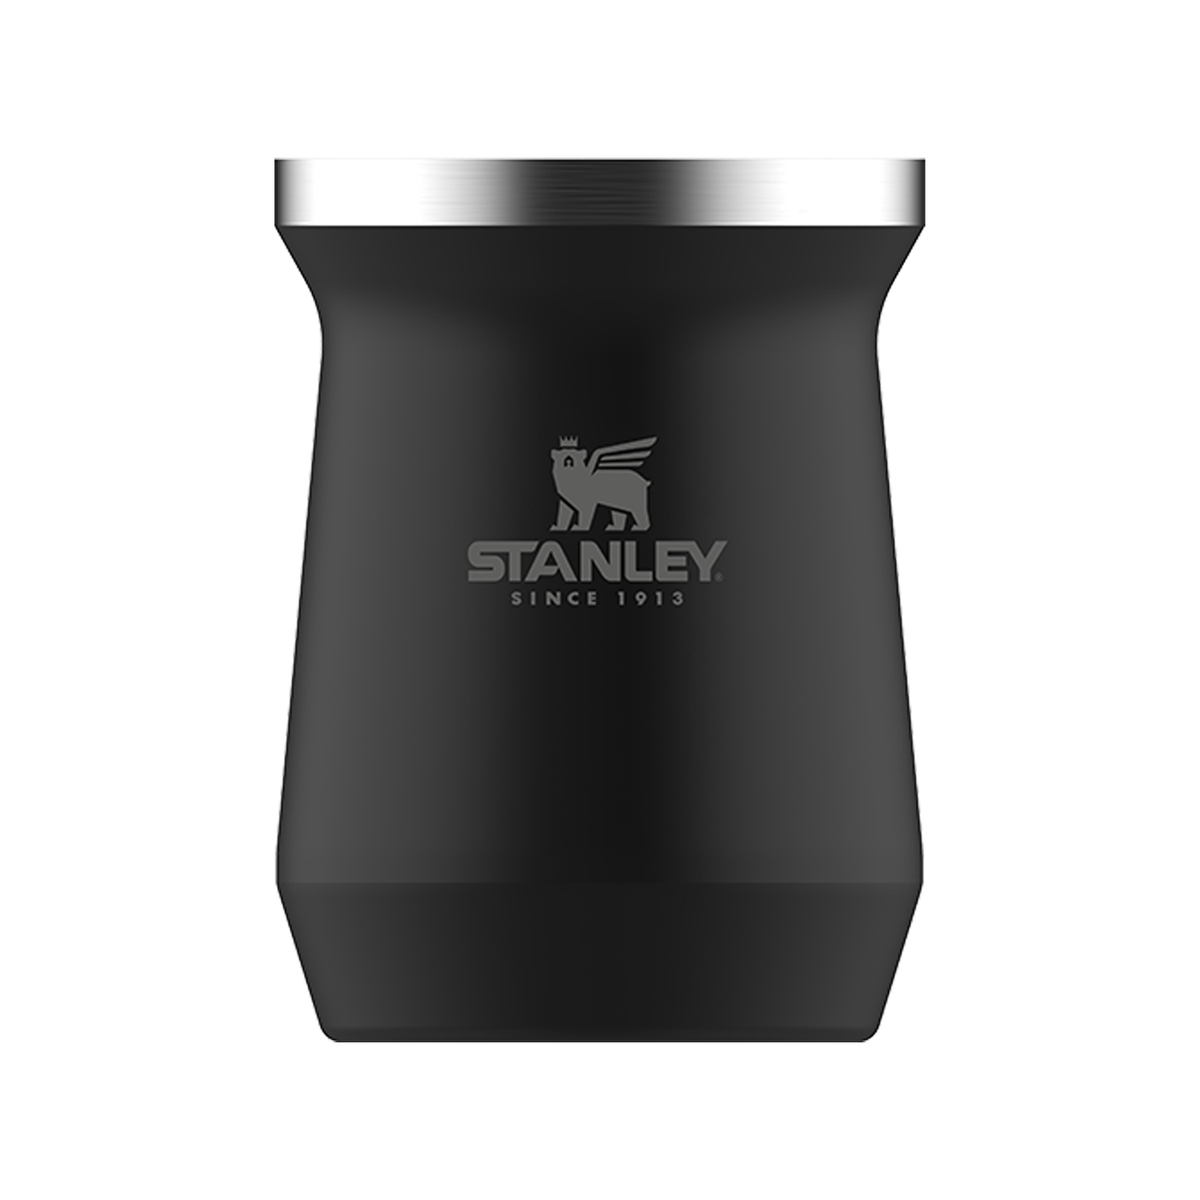 STANLEY NEW STAINLESS STEEL MATE - 236 ml. BLACK